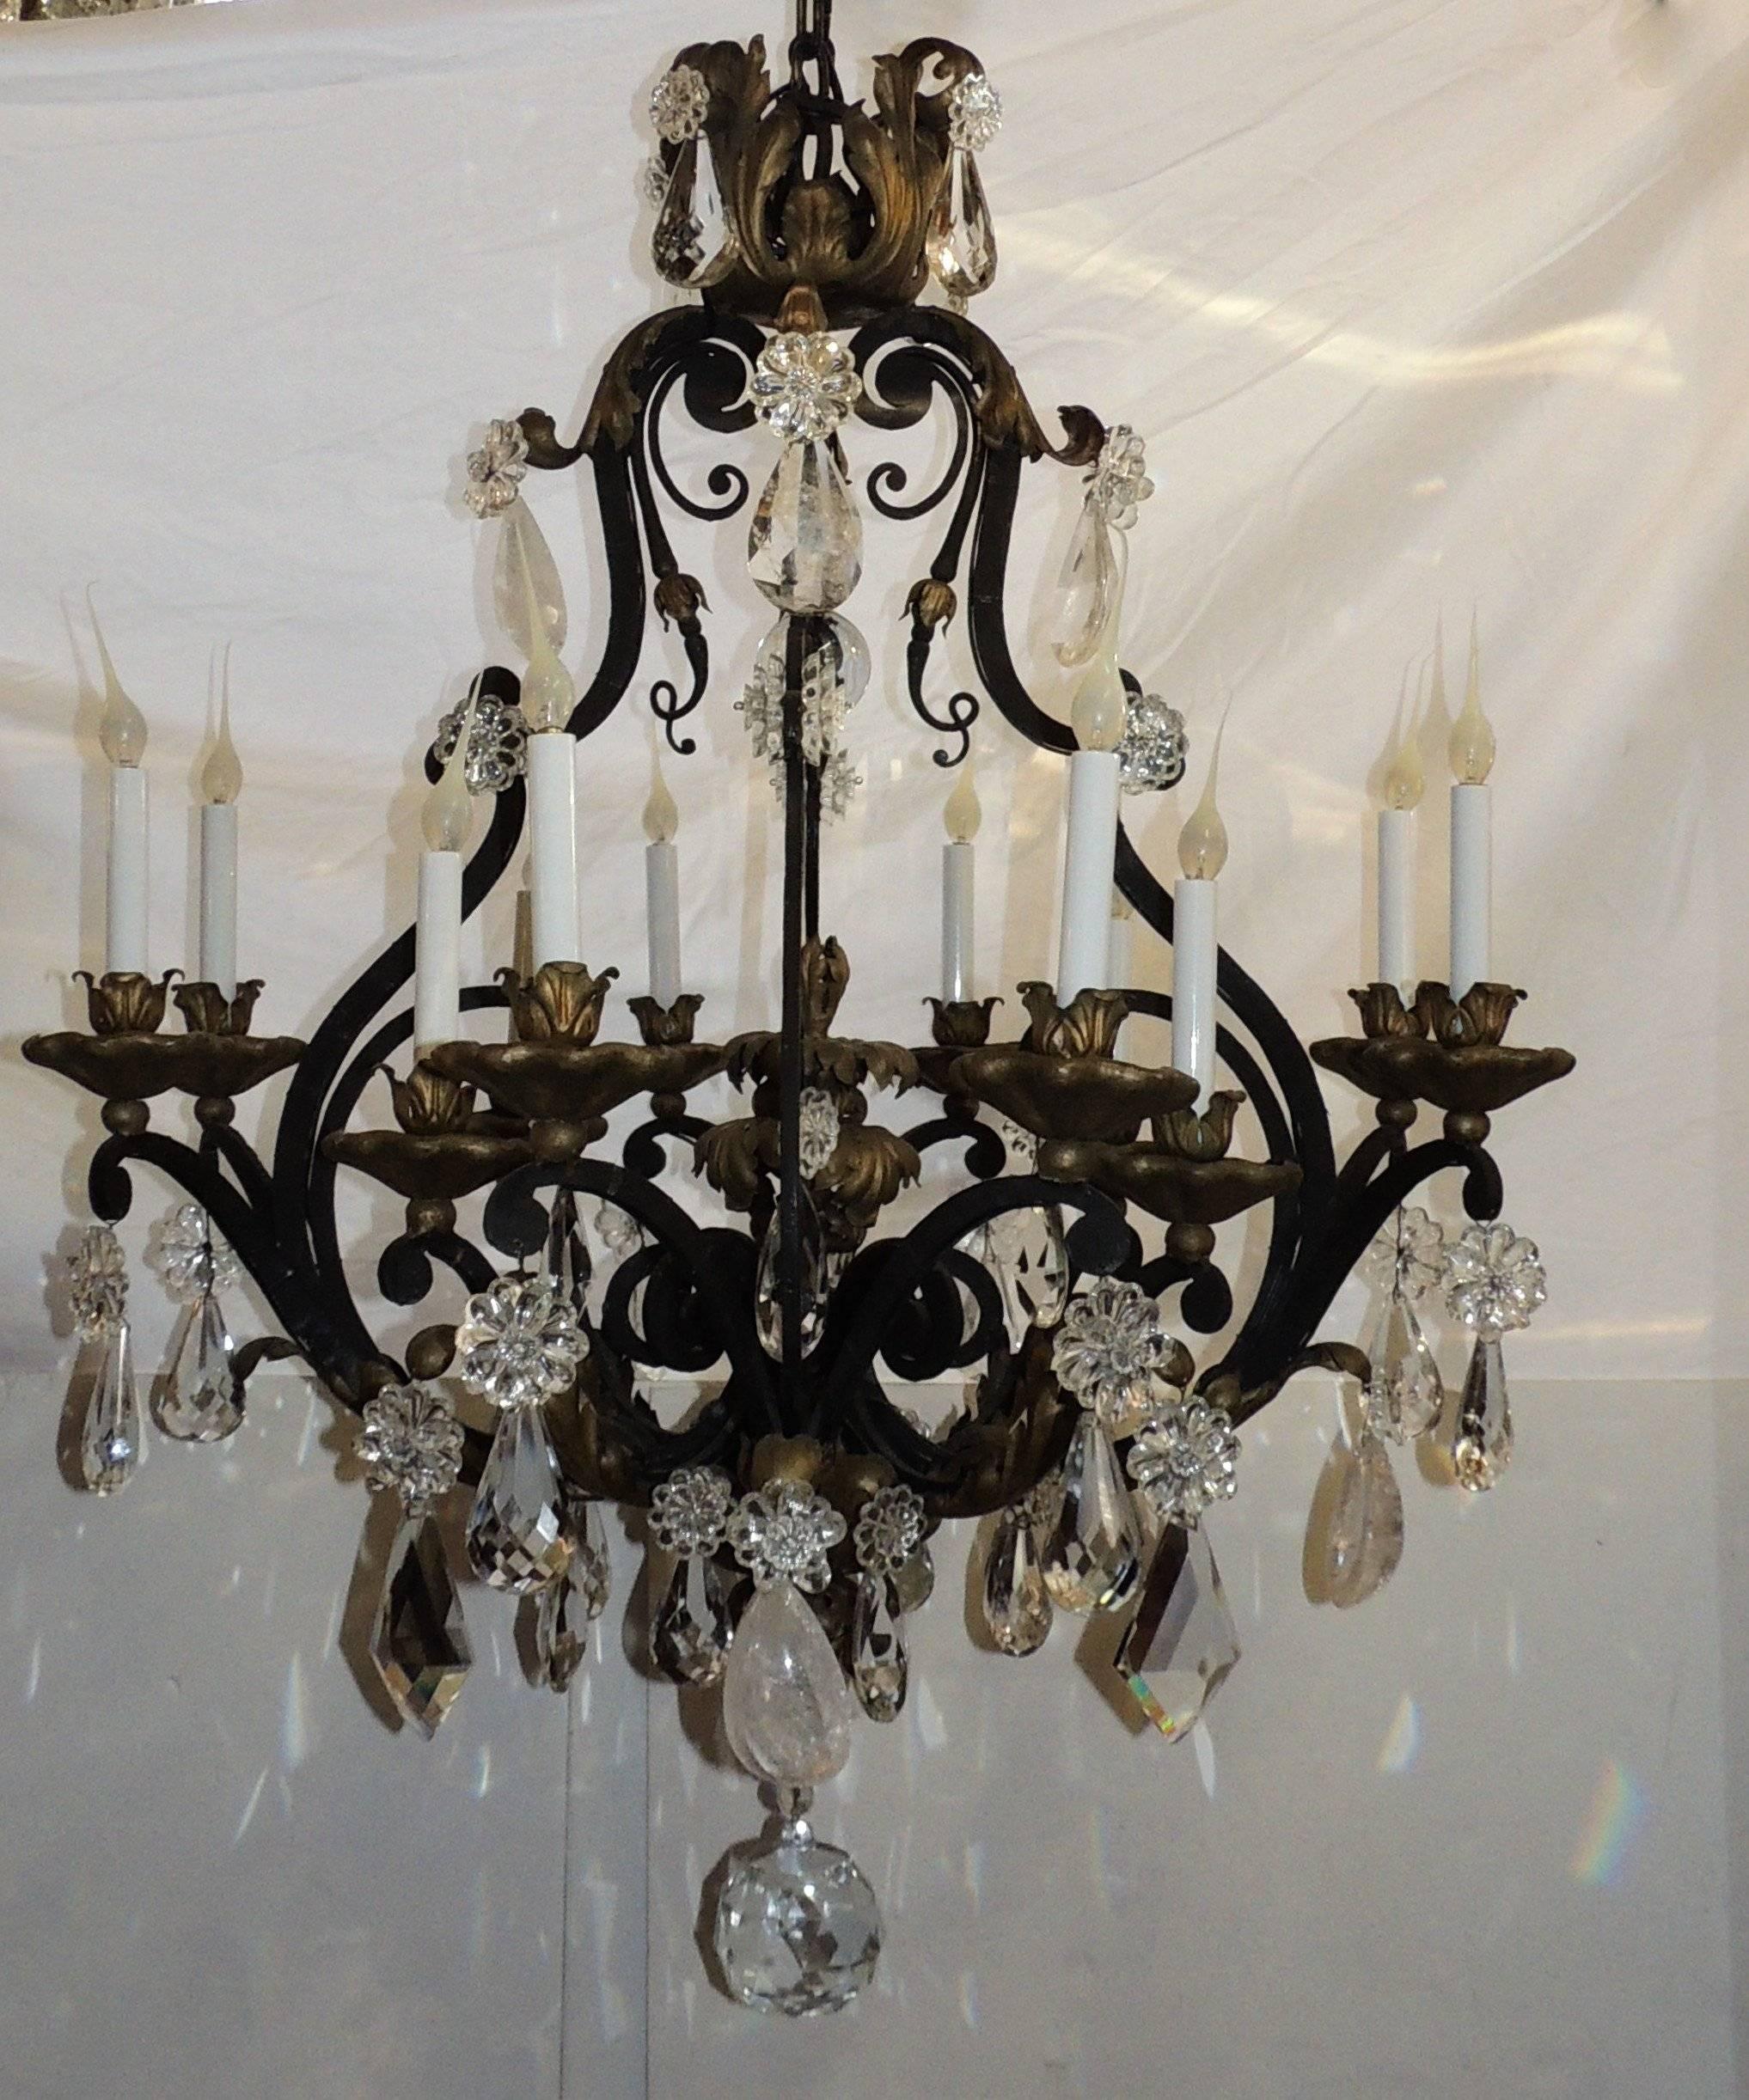 Wonderful large French wrought iron gilt bagues rock crystal twelve-light chandelier.

Measures: 46